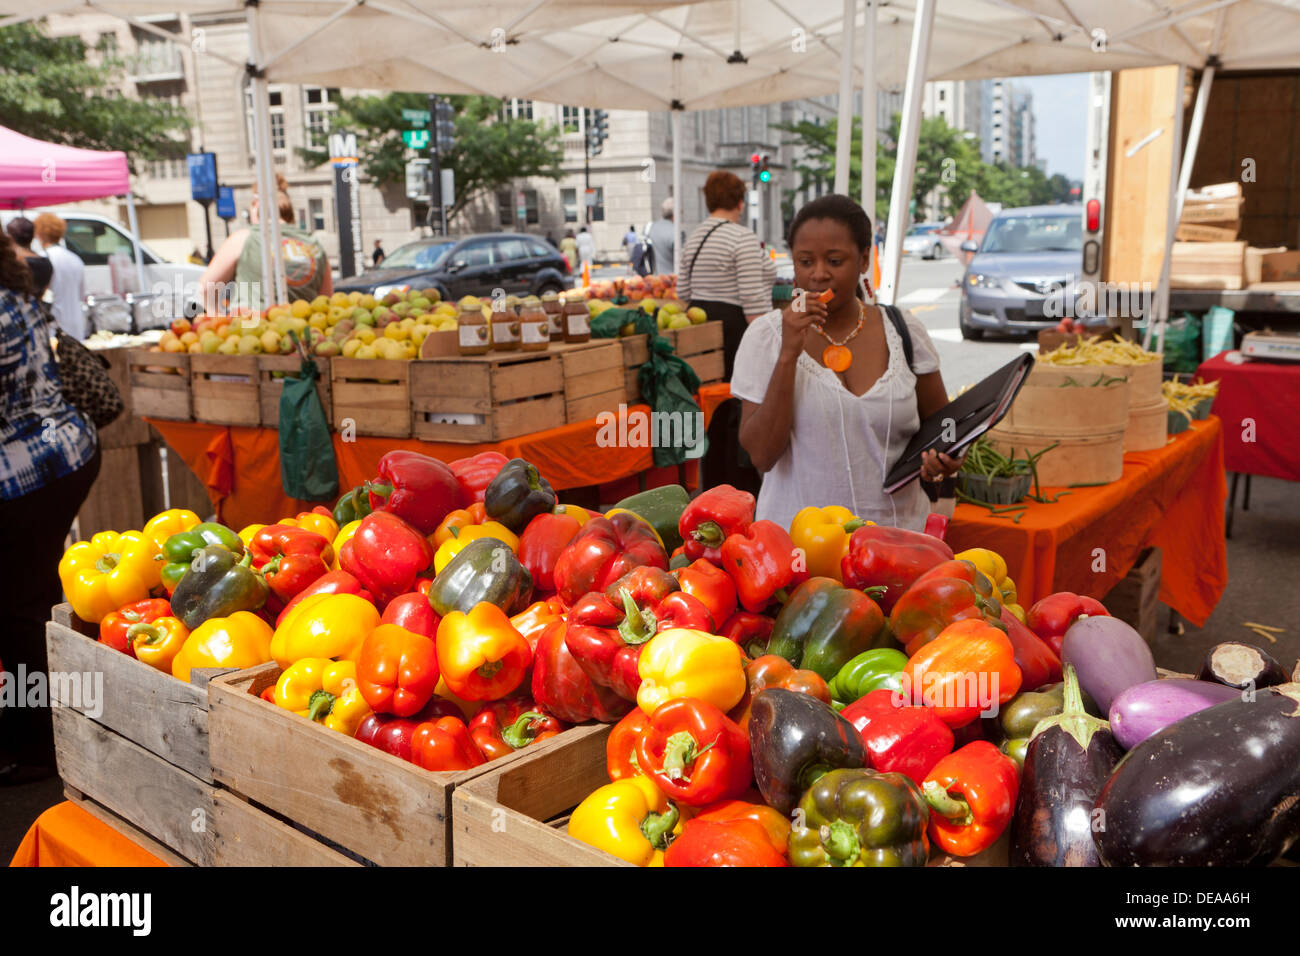 Woman buying fresh vegetables at farmers market - Washington, DC USA Stock Photo